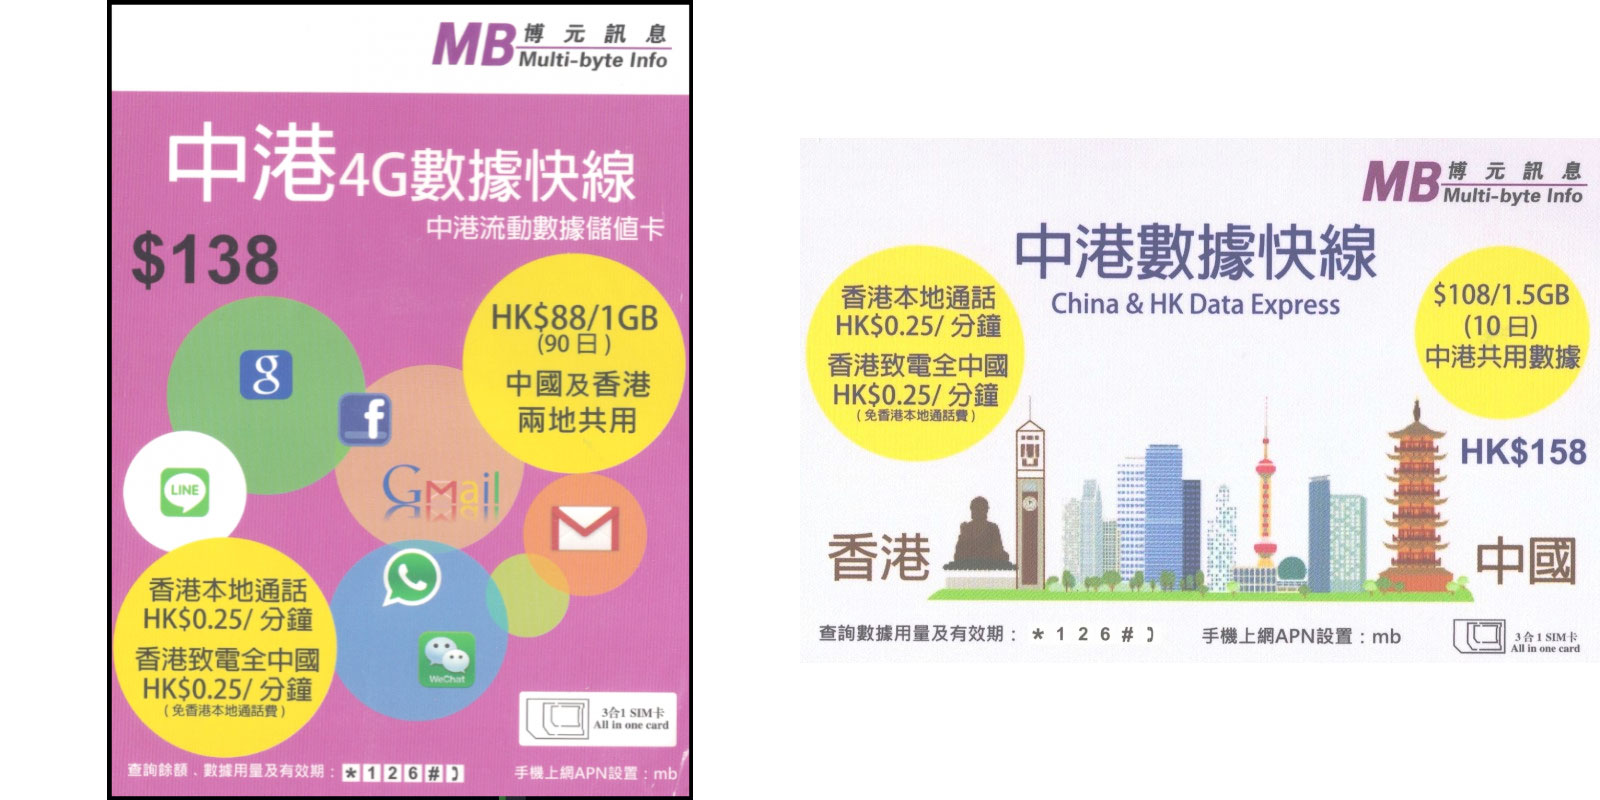 ComNet Telecom：Multi-Byte 1GB數據 + 通話(香港/中國共用)只需$24